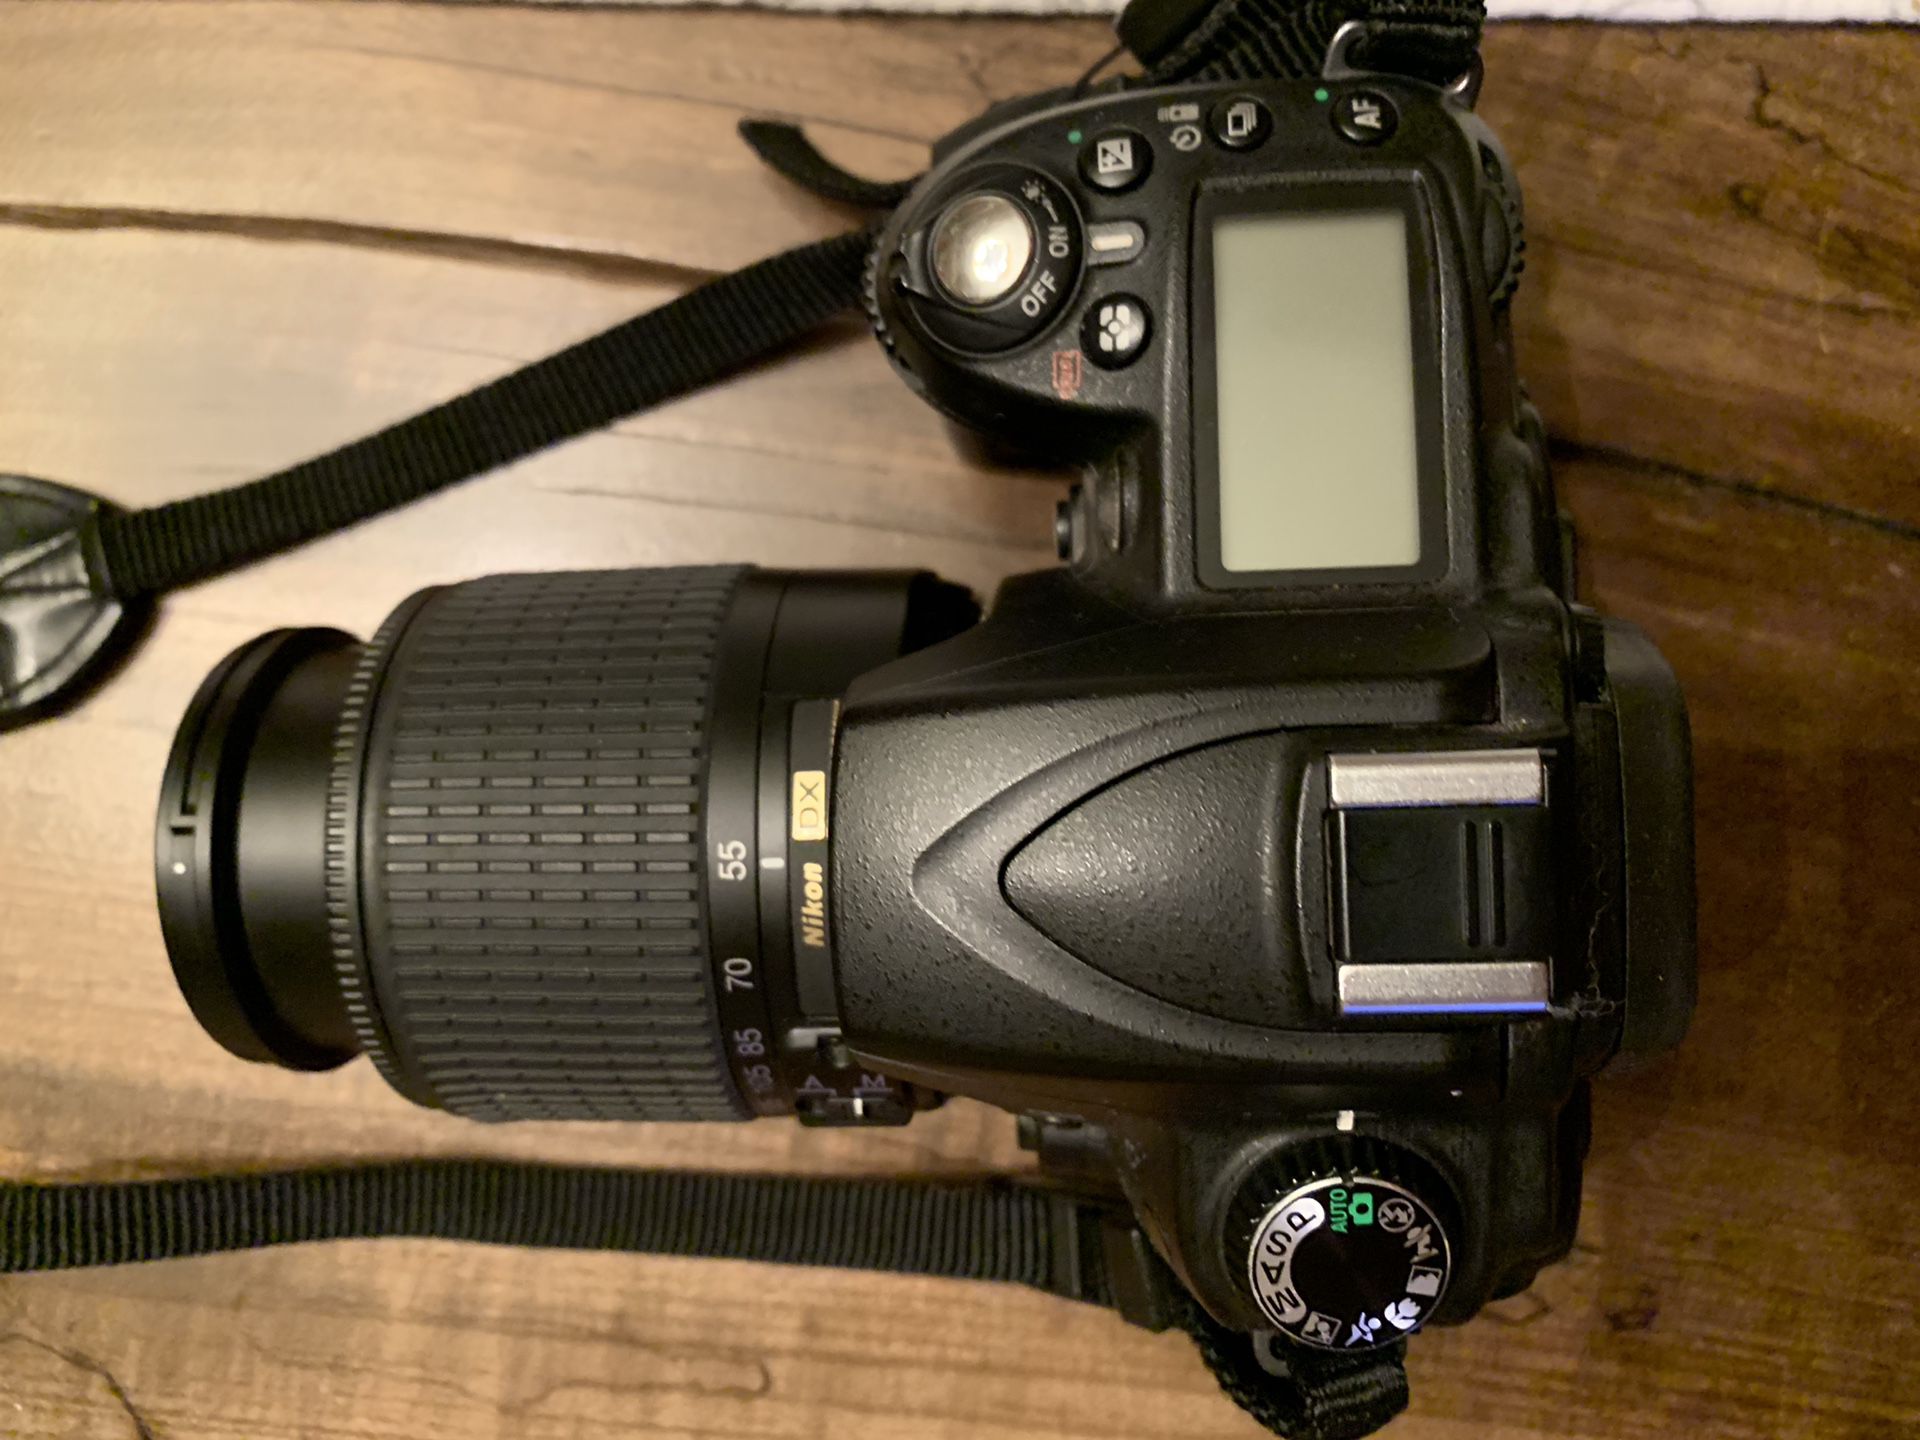 Nikon d90 camera with lens